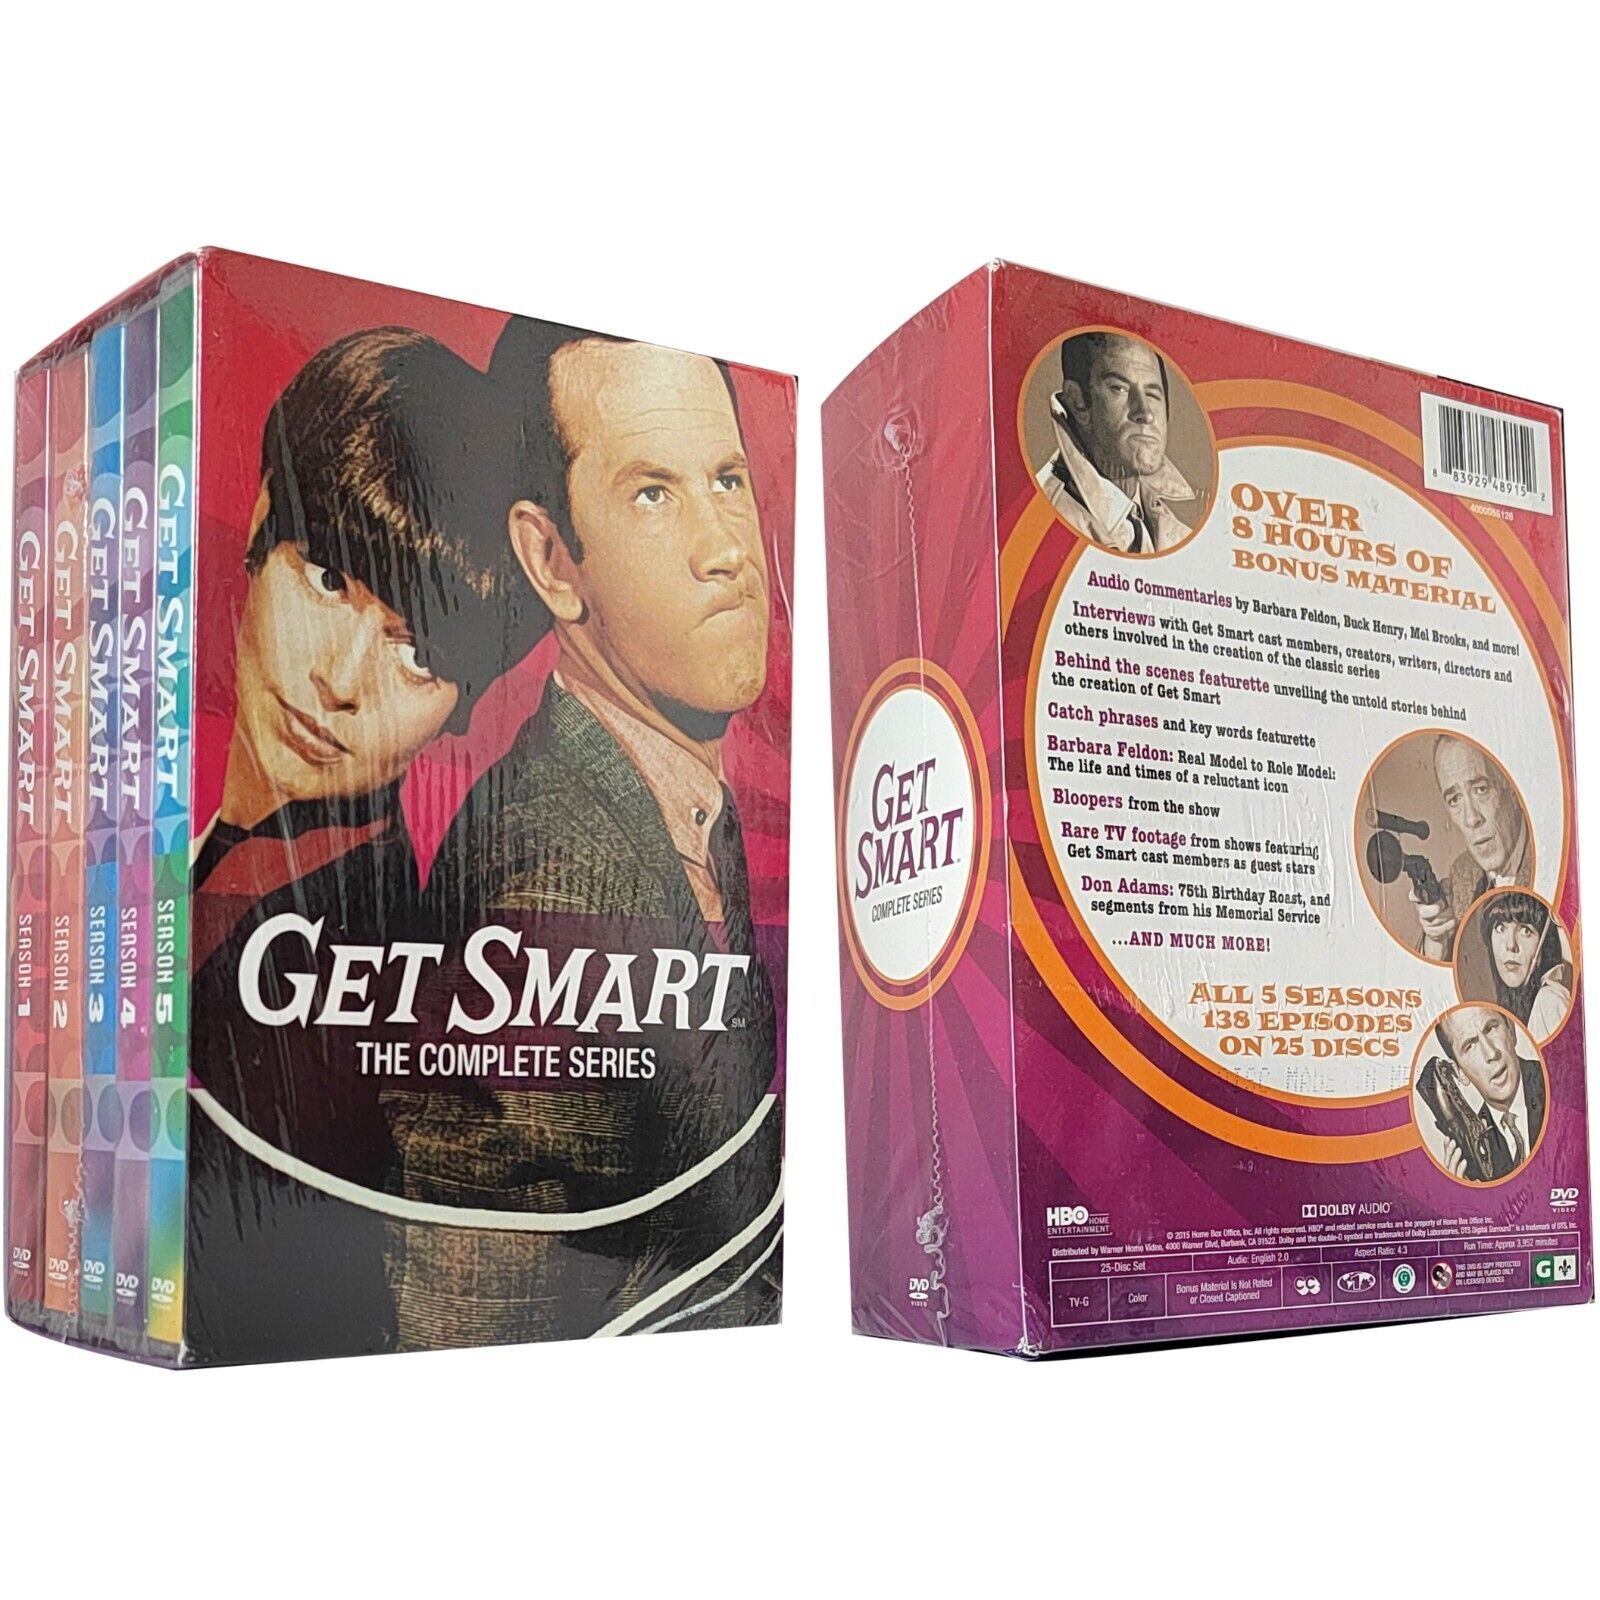 Get Smart The Complete Series DVD 25-Disc Don Adams , Region 1